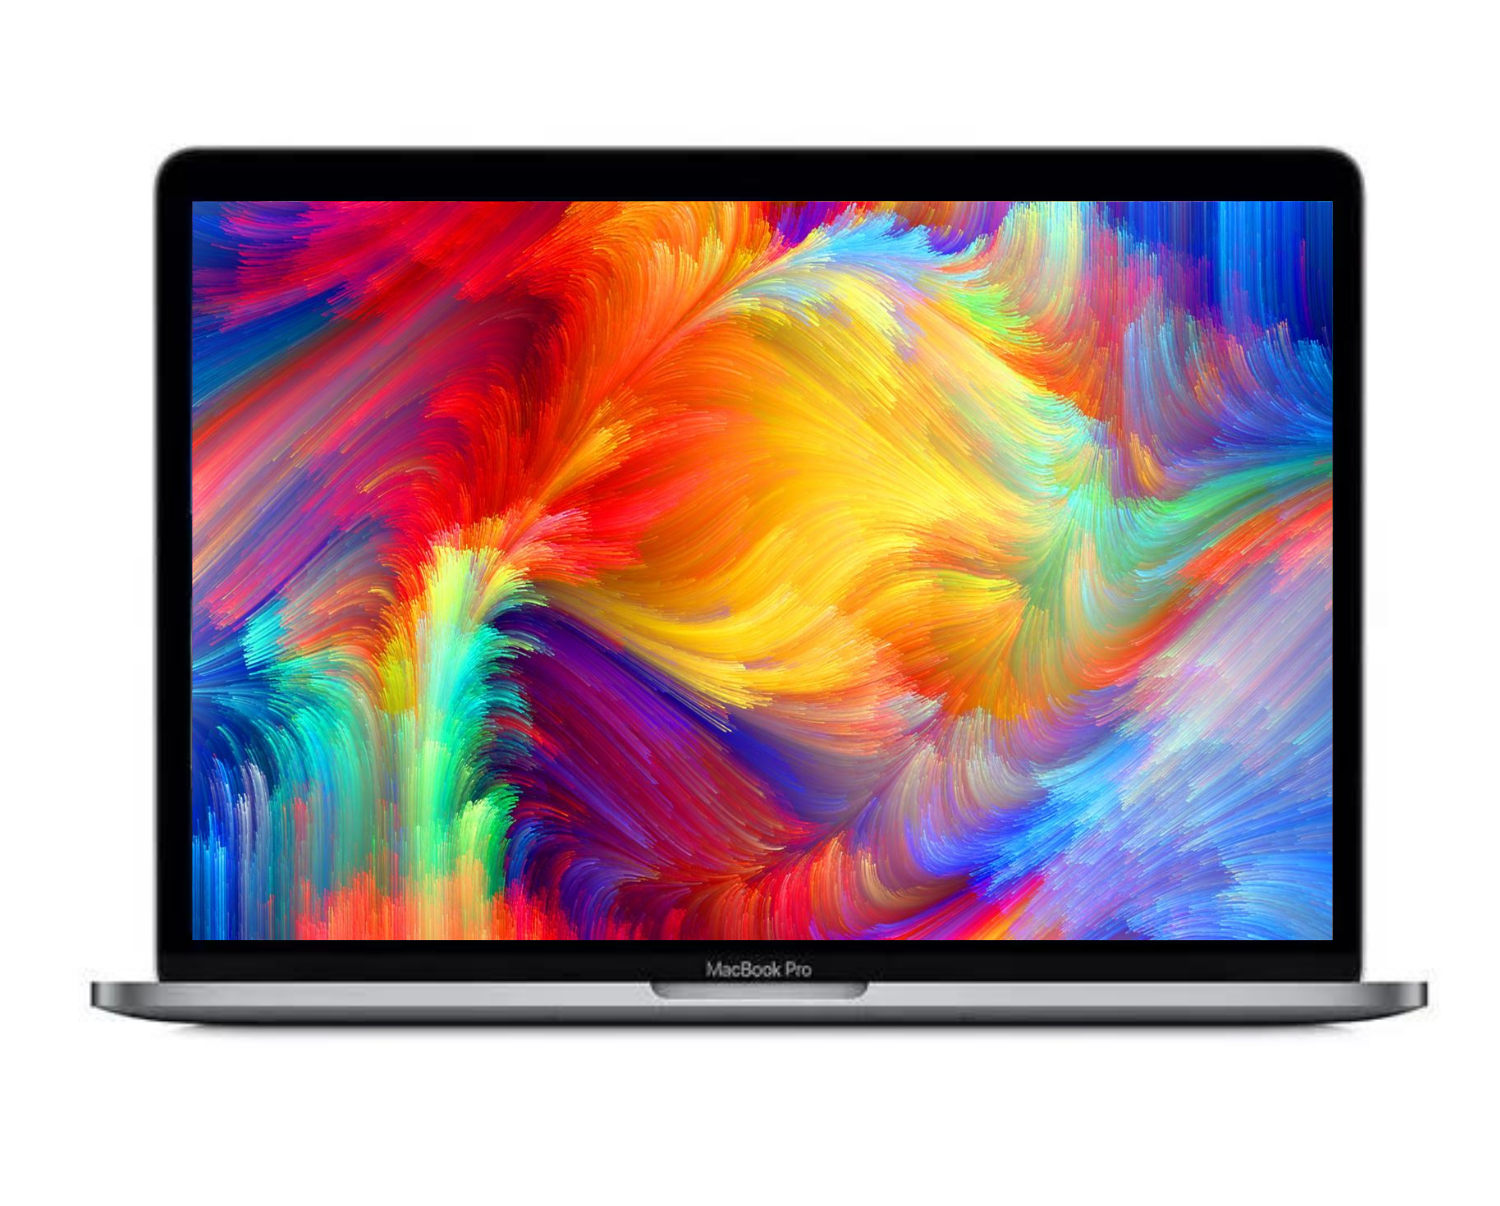 MacBook Pro 13 inch i5 8GB 256GB 2017